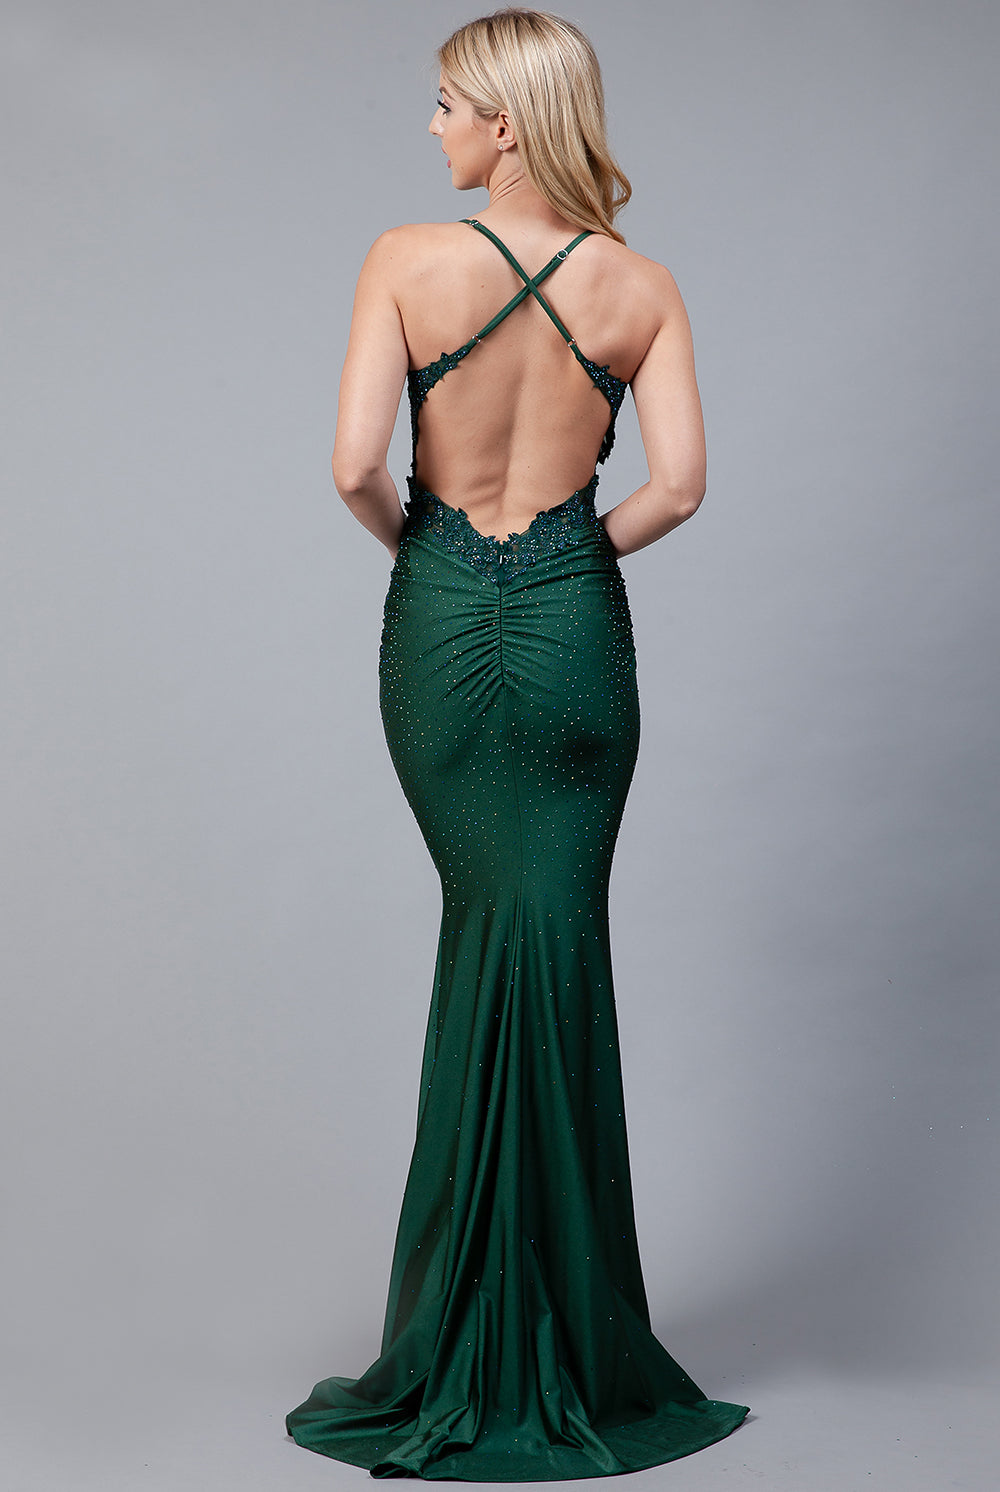 Embroidered Bodice Open Criss Cross Back Mermaid Long Prom Dress ACTM1001-Prom Dress-smcfashion.com